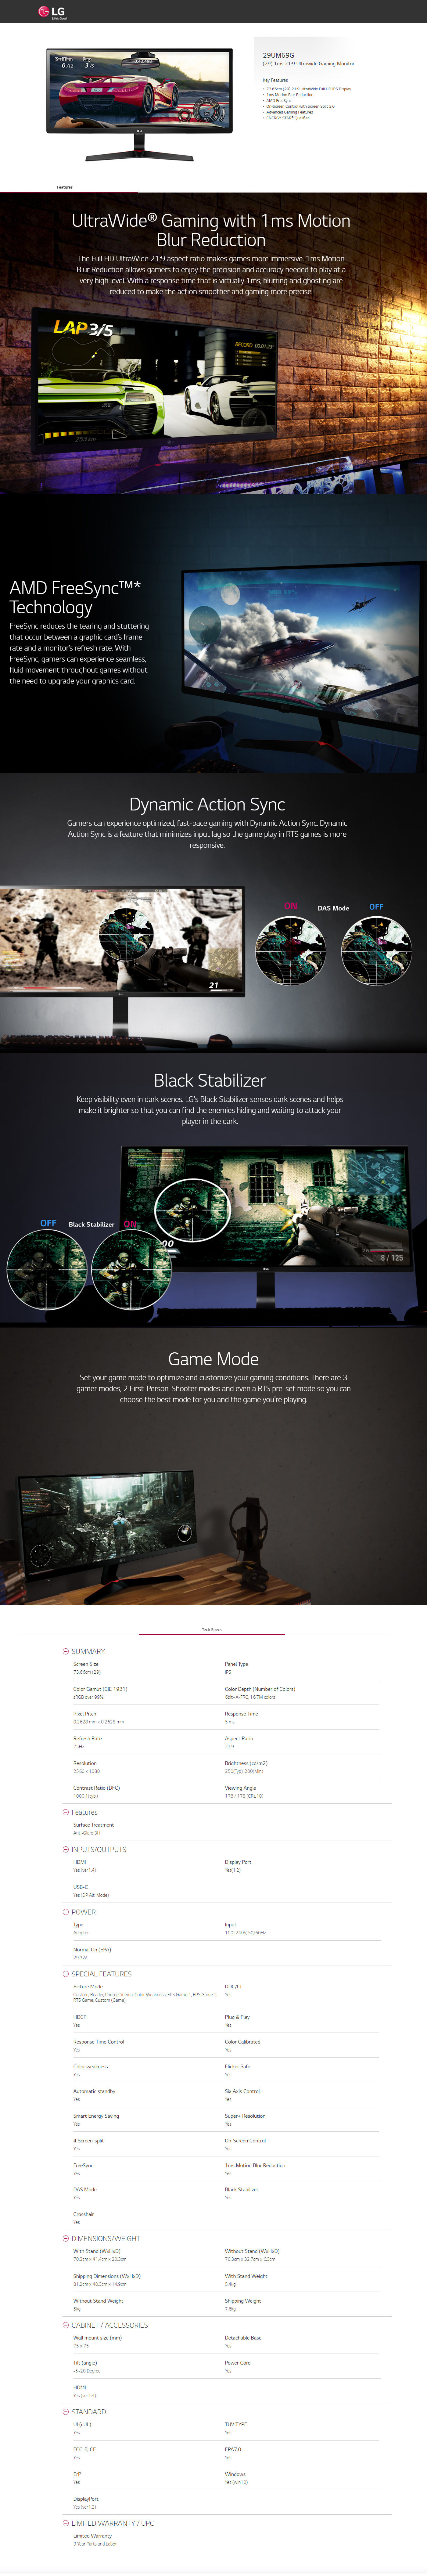  Buy Online LG 29inch 1ms Ultrawide Gaming Monitor (29UM69G)